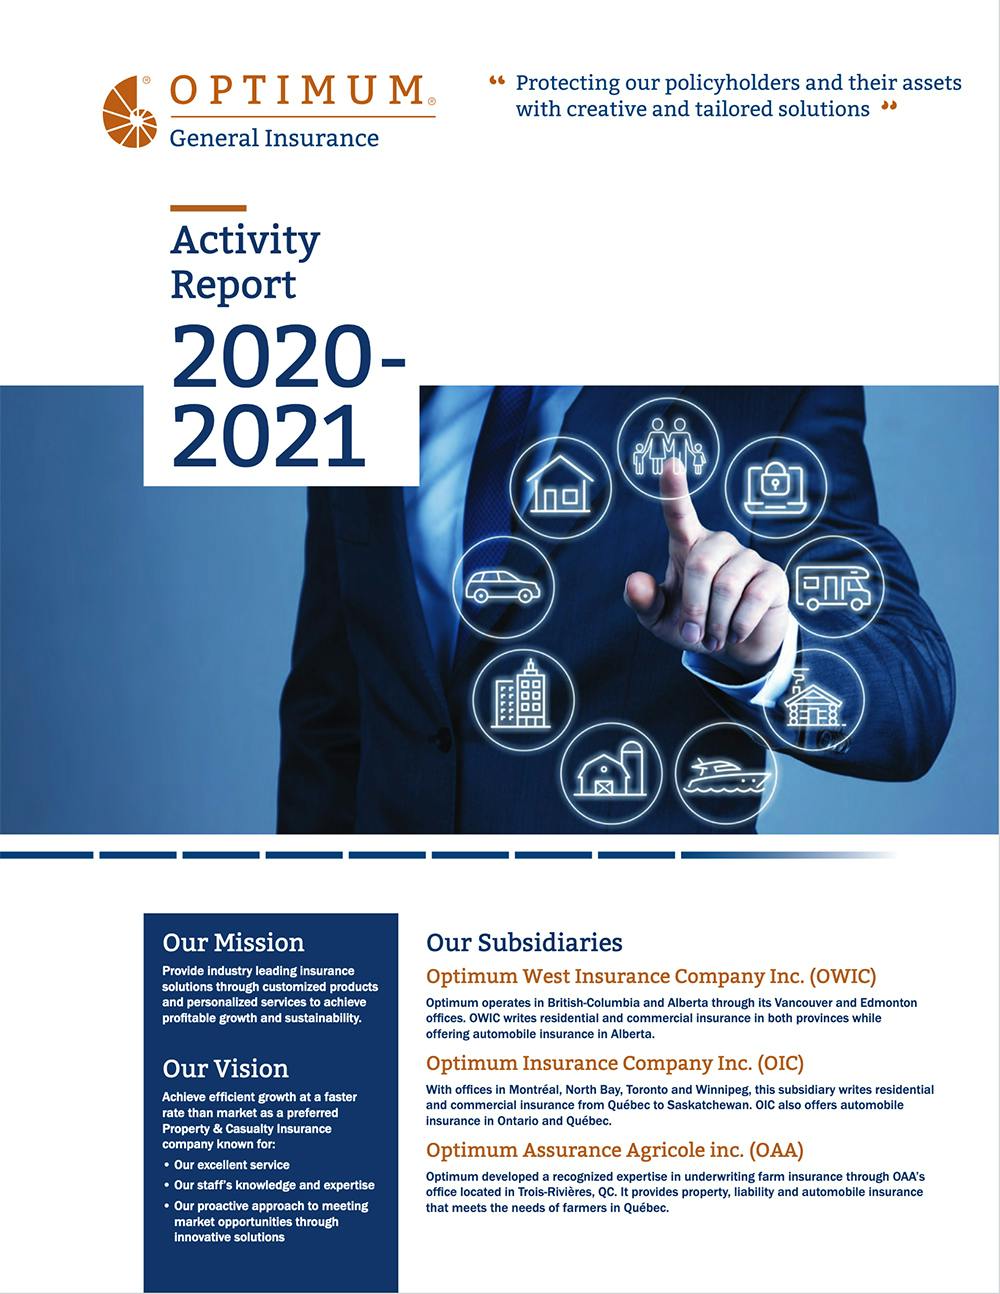 OGI - 2021-2020 Activity report